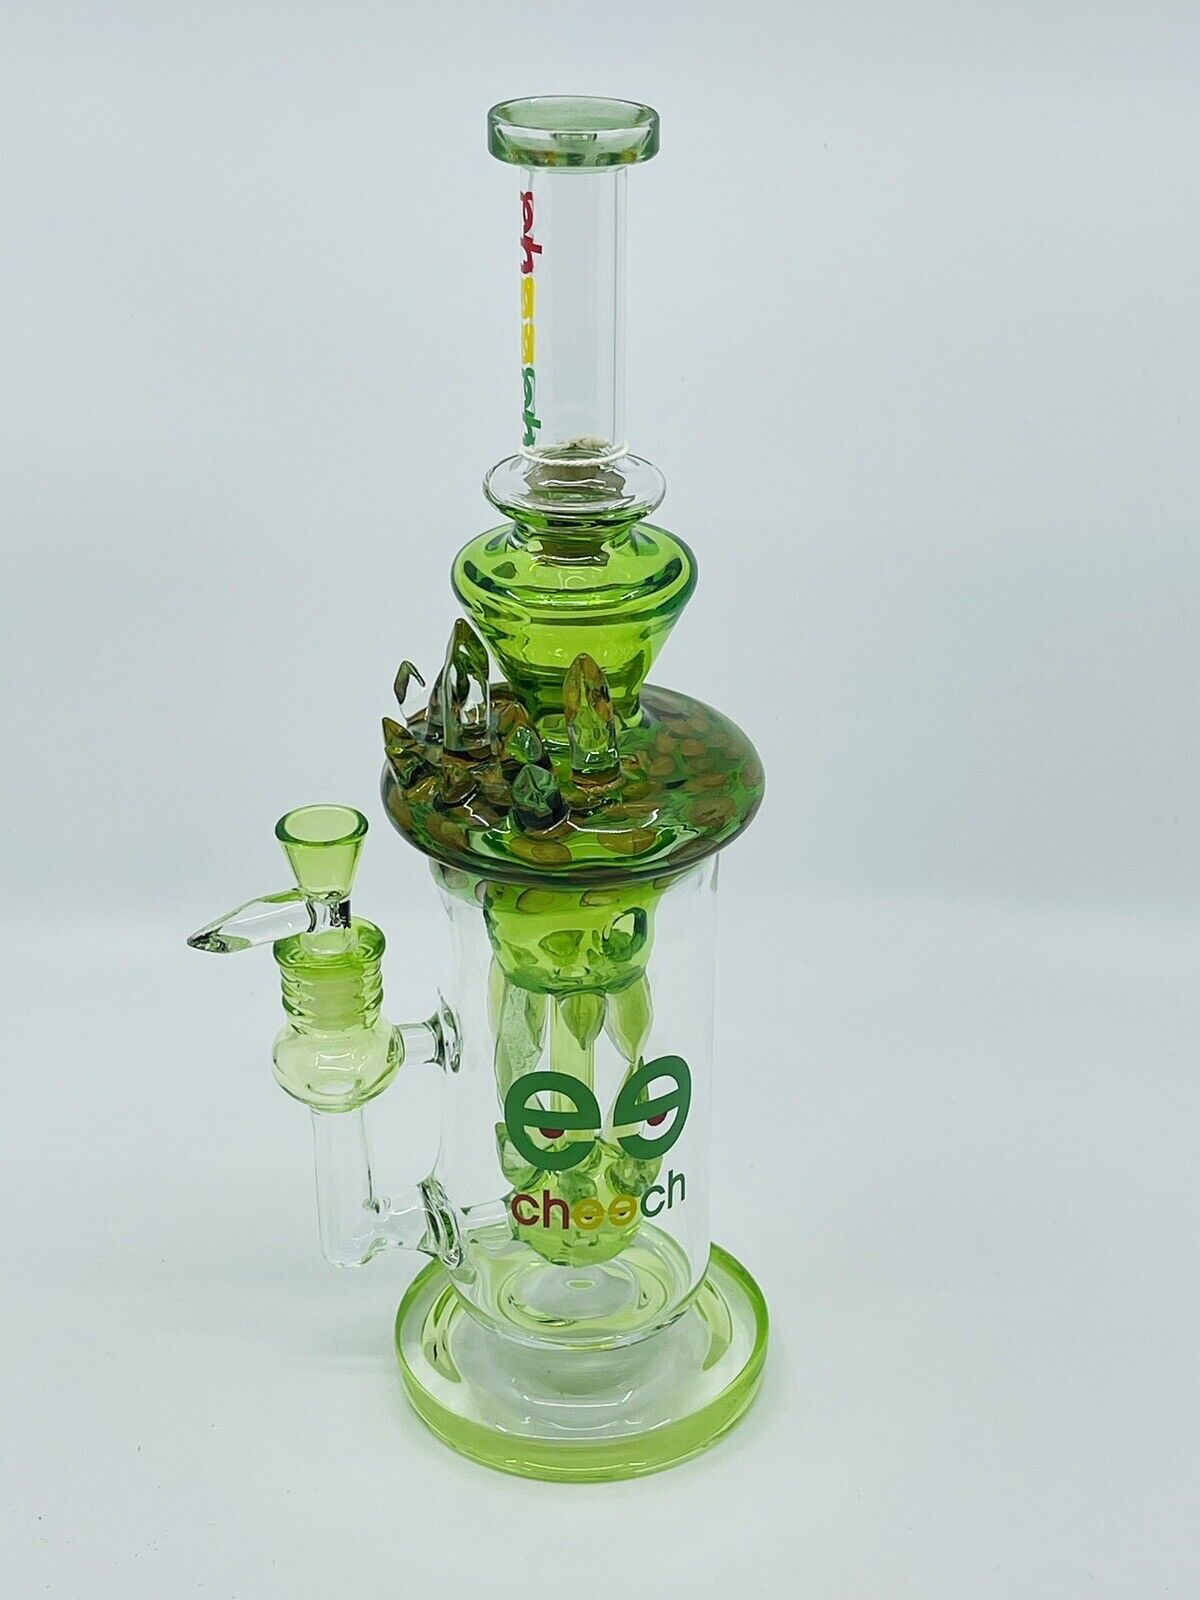 Cheech Bong Glass Bong Waterpipe Green Perc Recycler 12 Inch tall